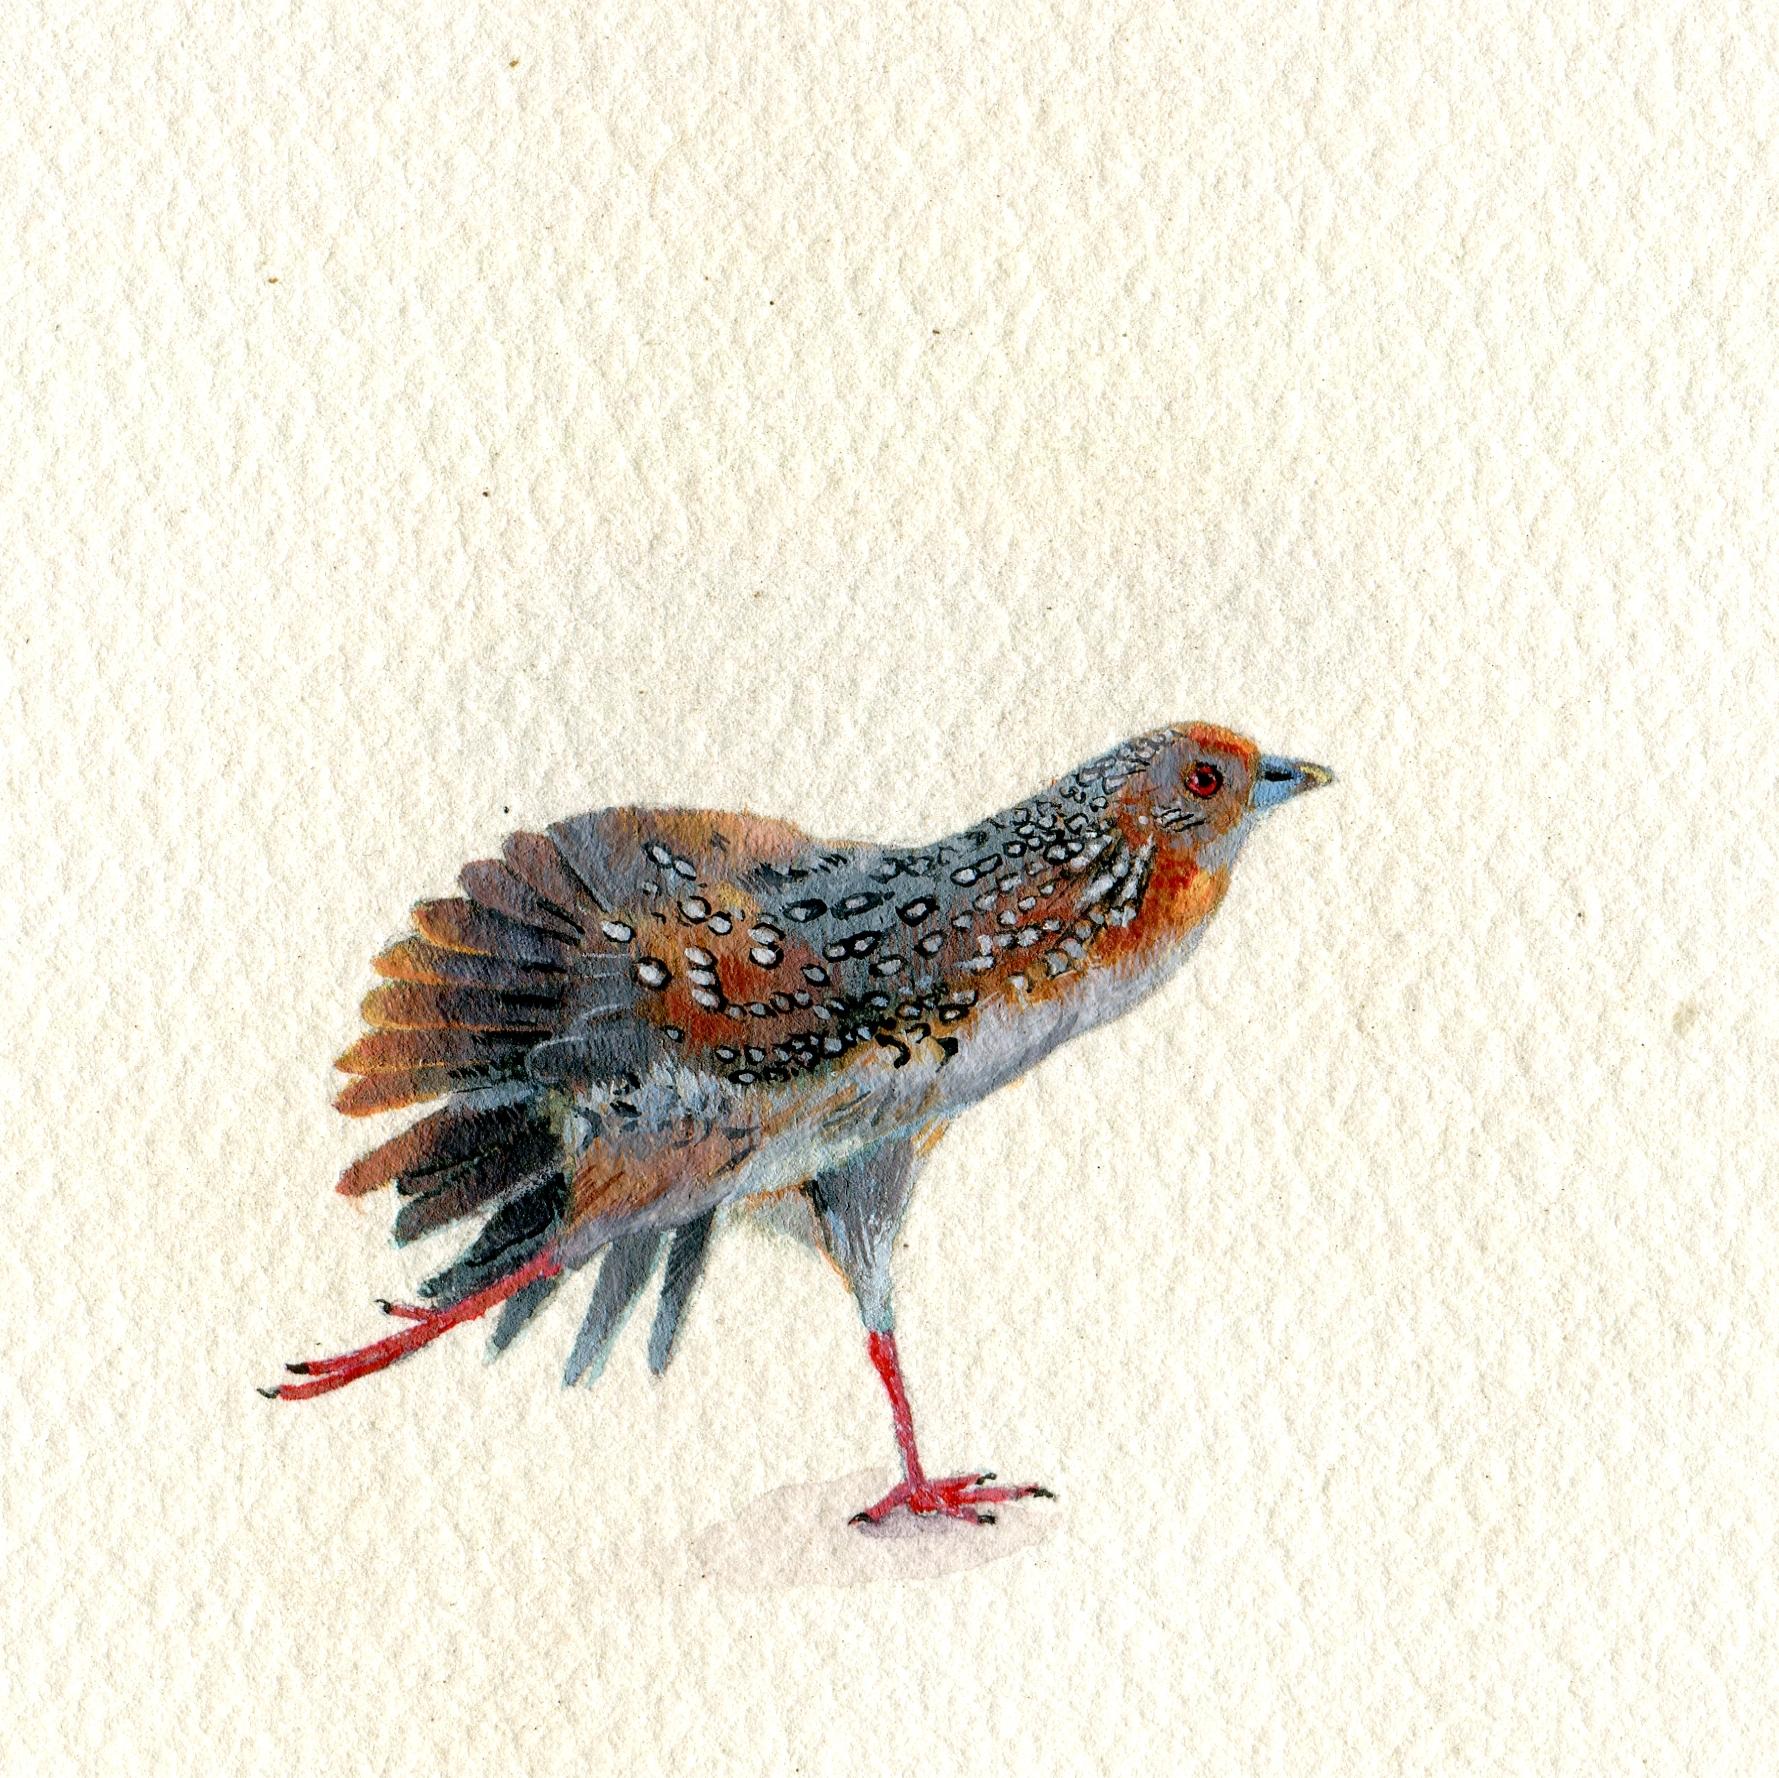 Dina Brodsky Portrait - Ocellated Crake, realist gouache on paper miniature bird portrait, 2020